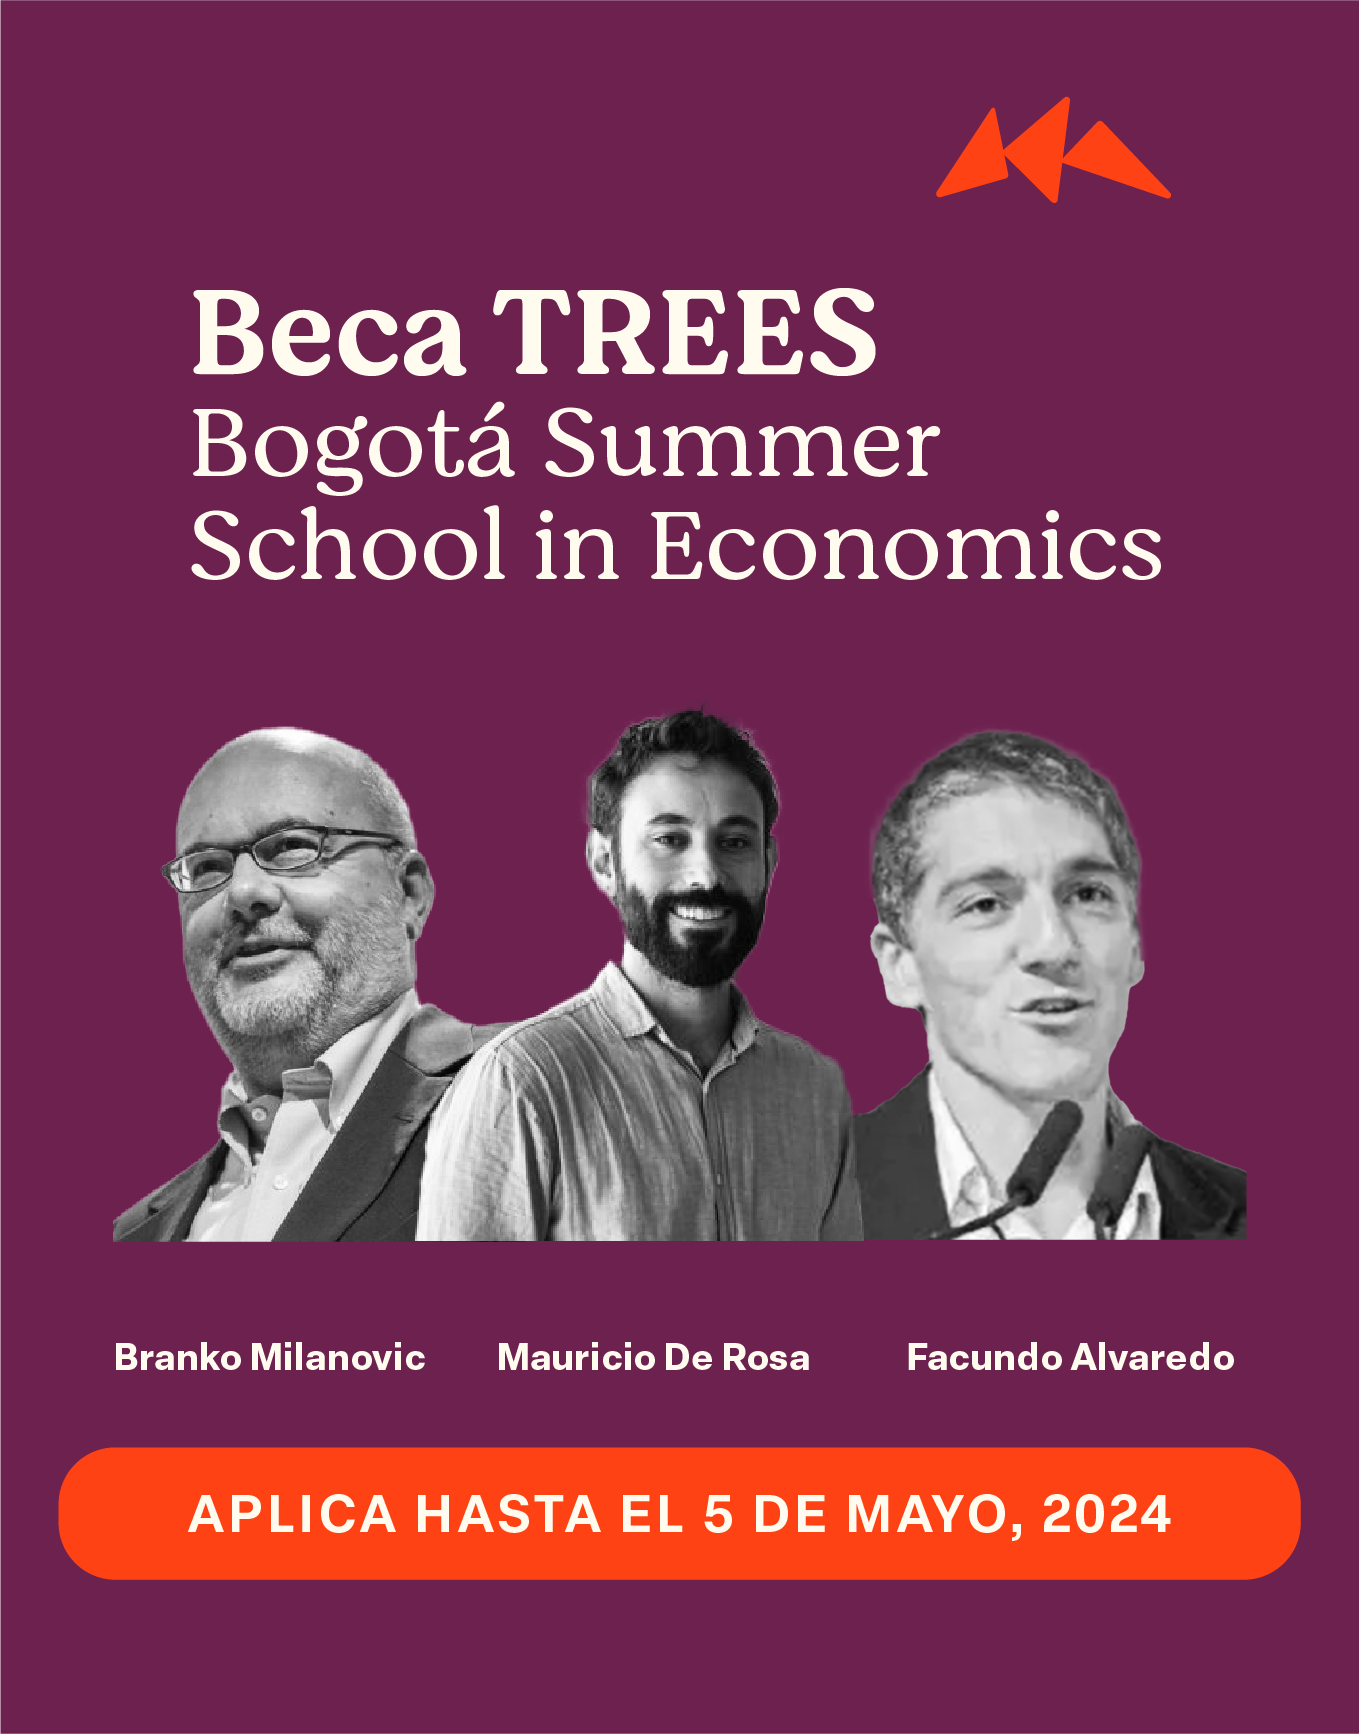 Beca TREES – Bogotá Summer School in Economics 